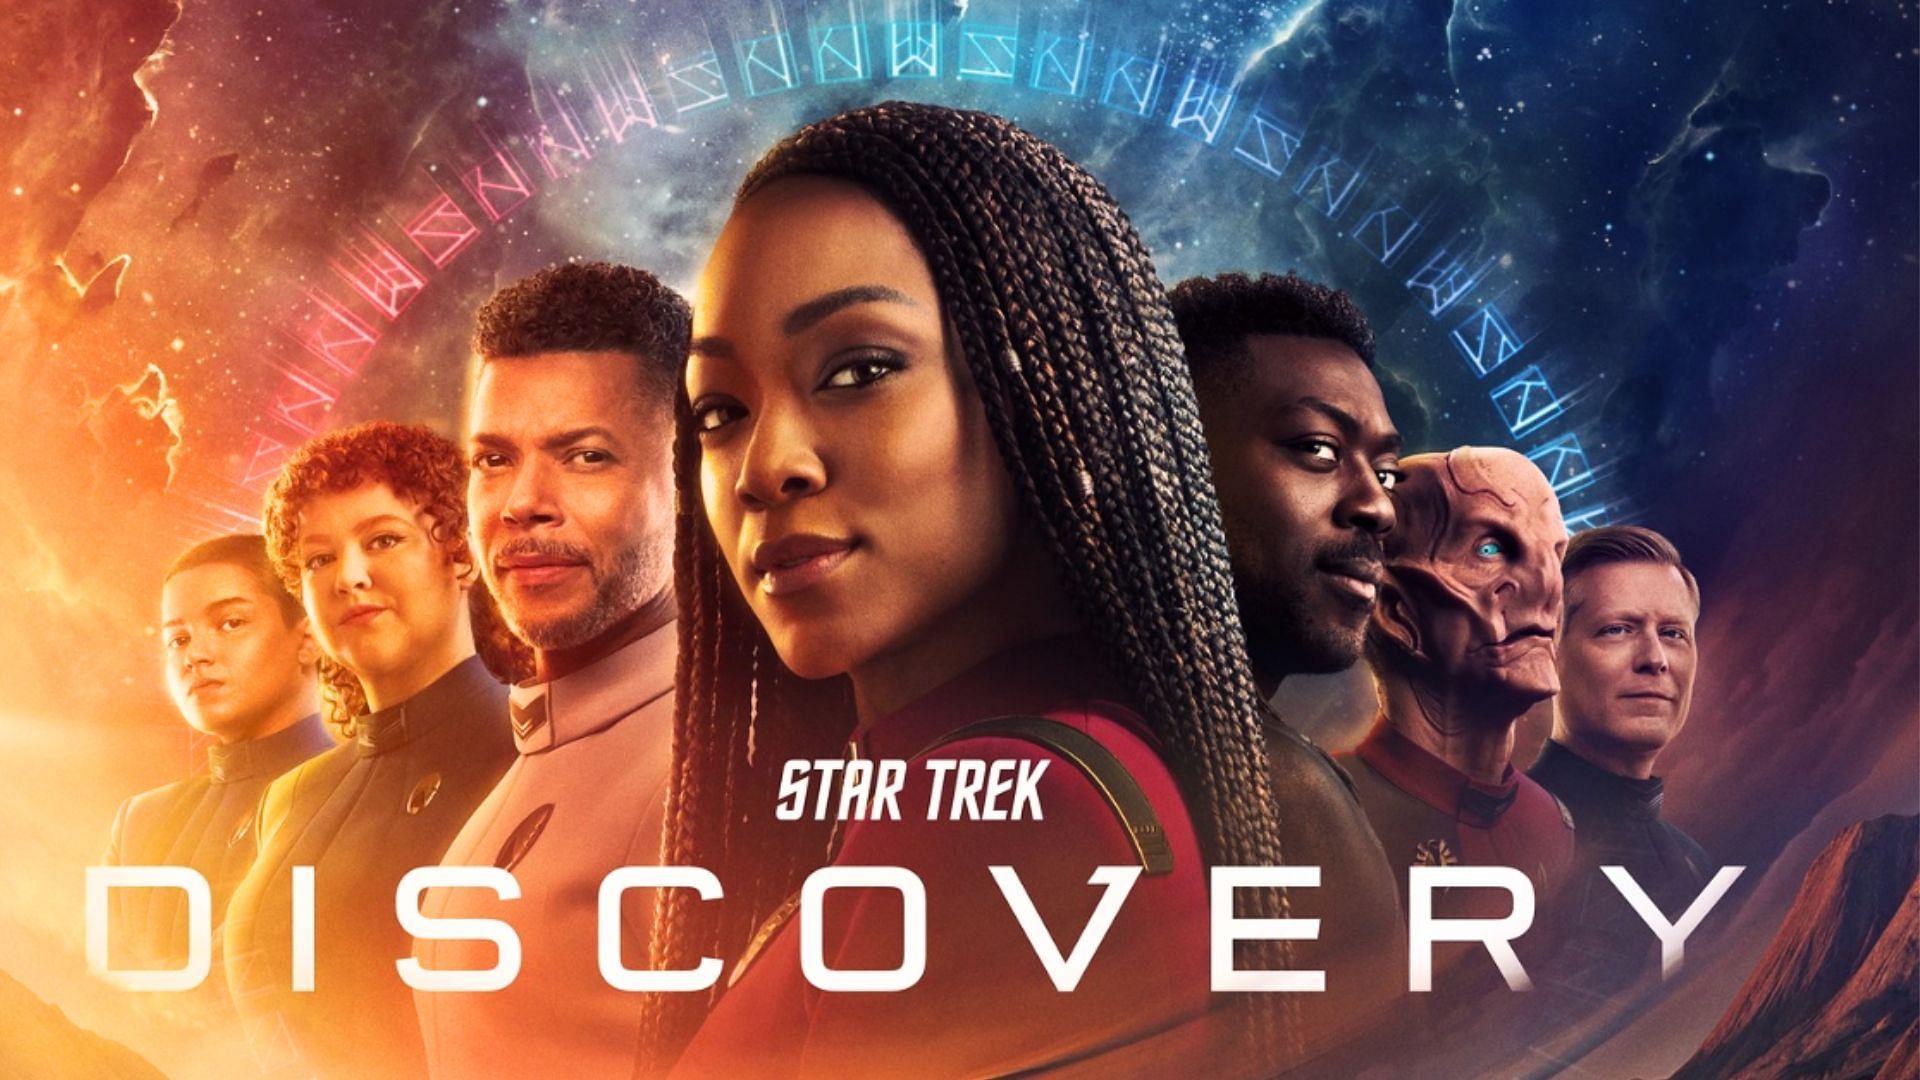 Star Trek: Discovery is showing its final season (Image via Instagram)